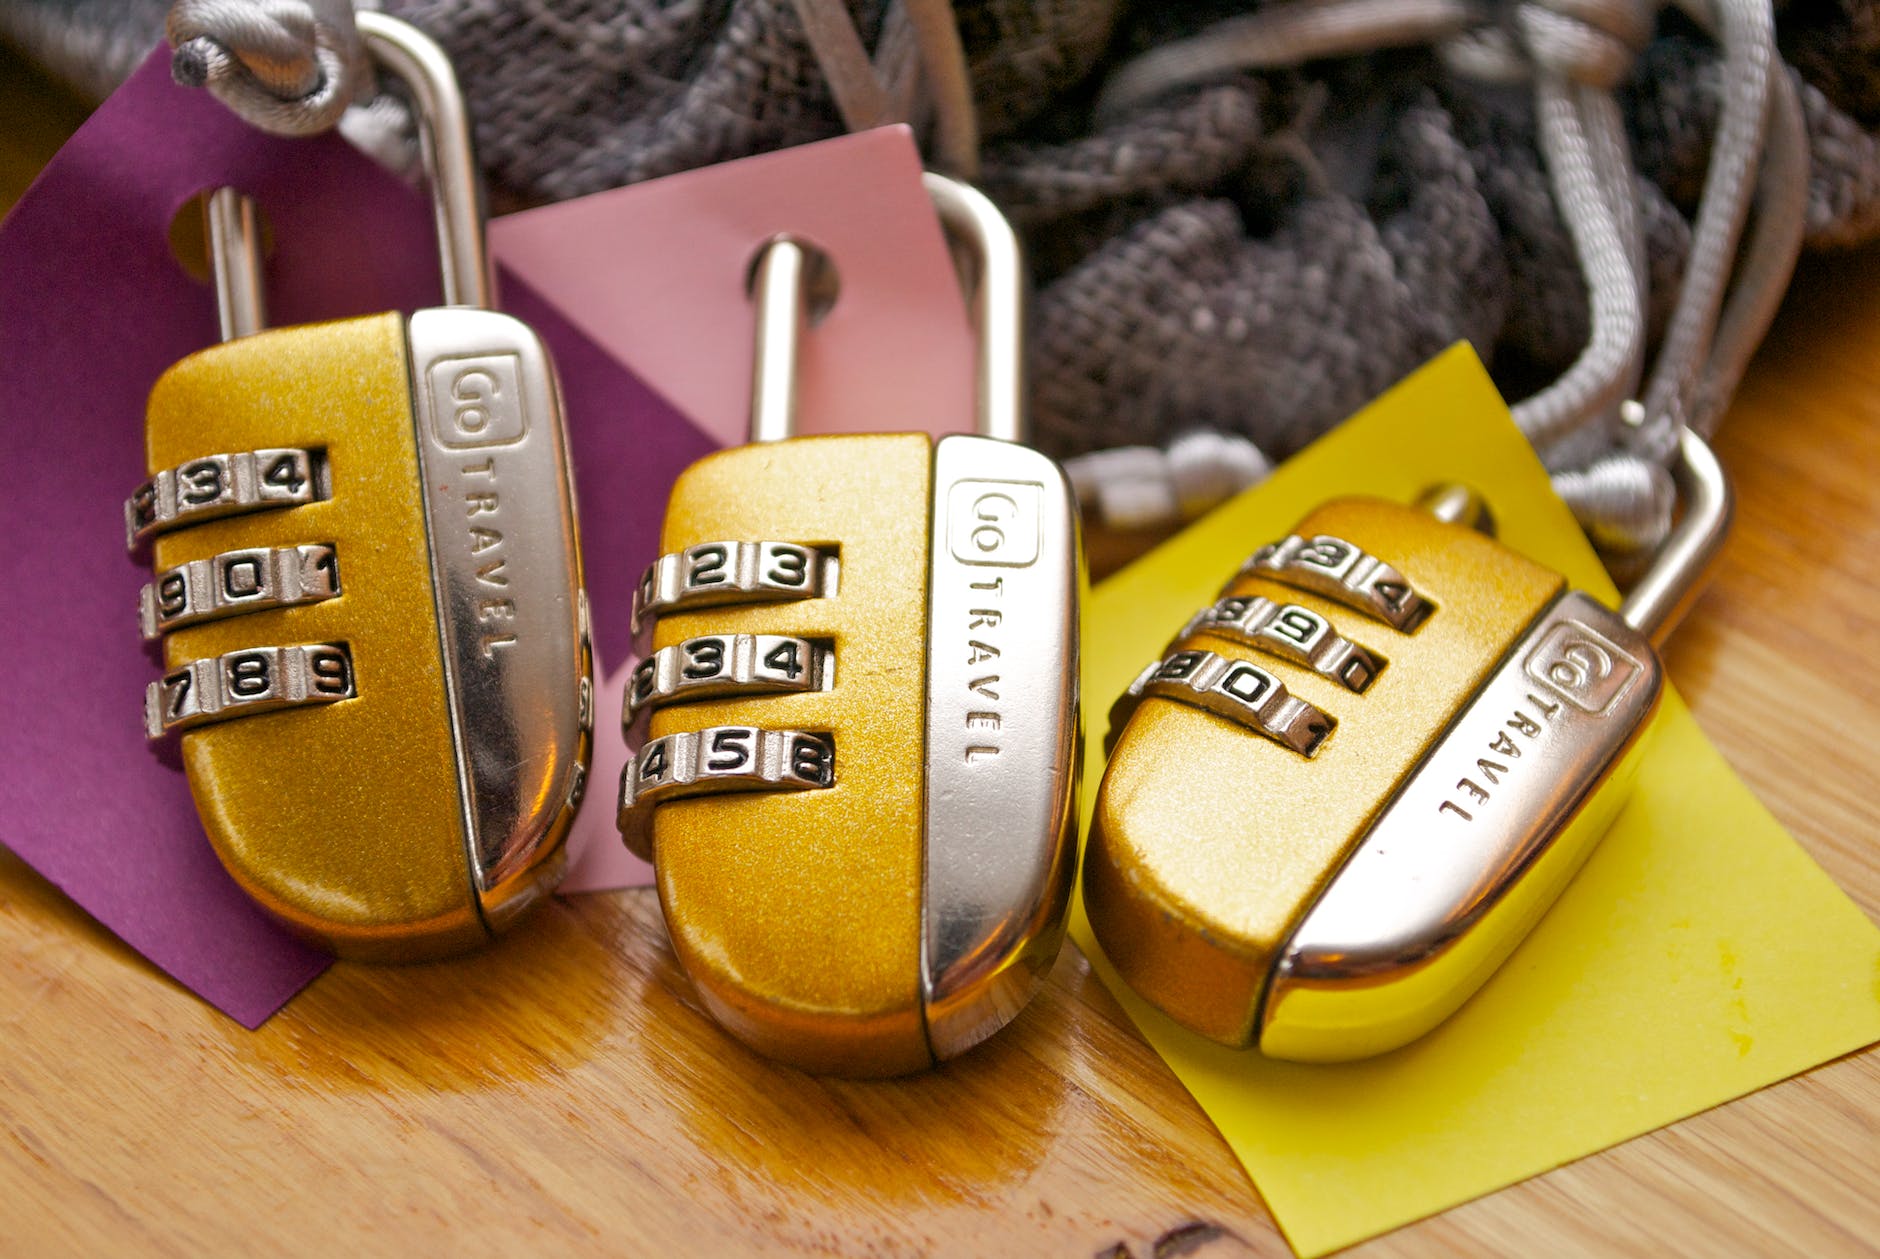 three gold and silver combination padlocks